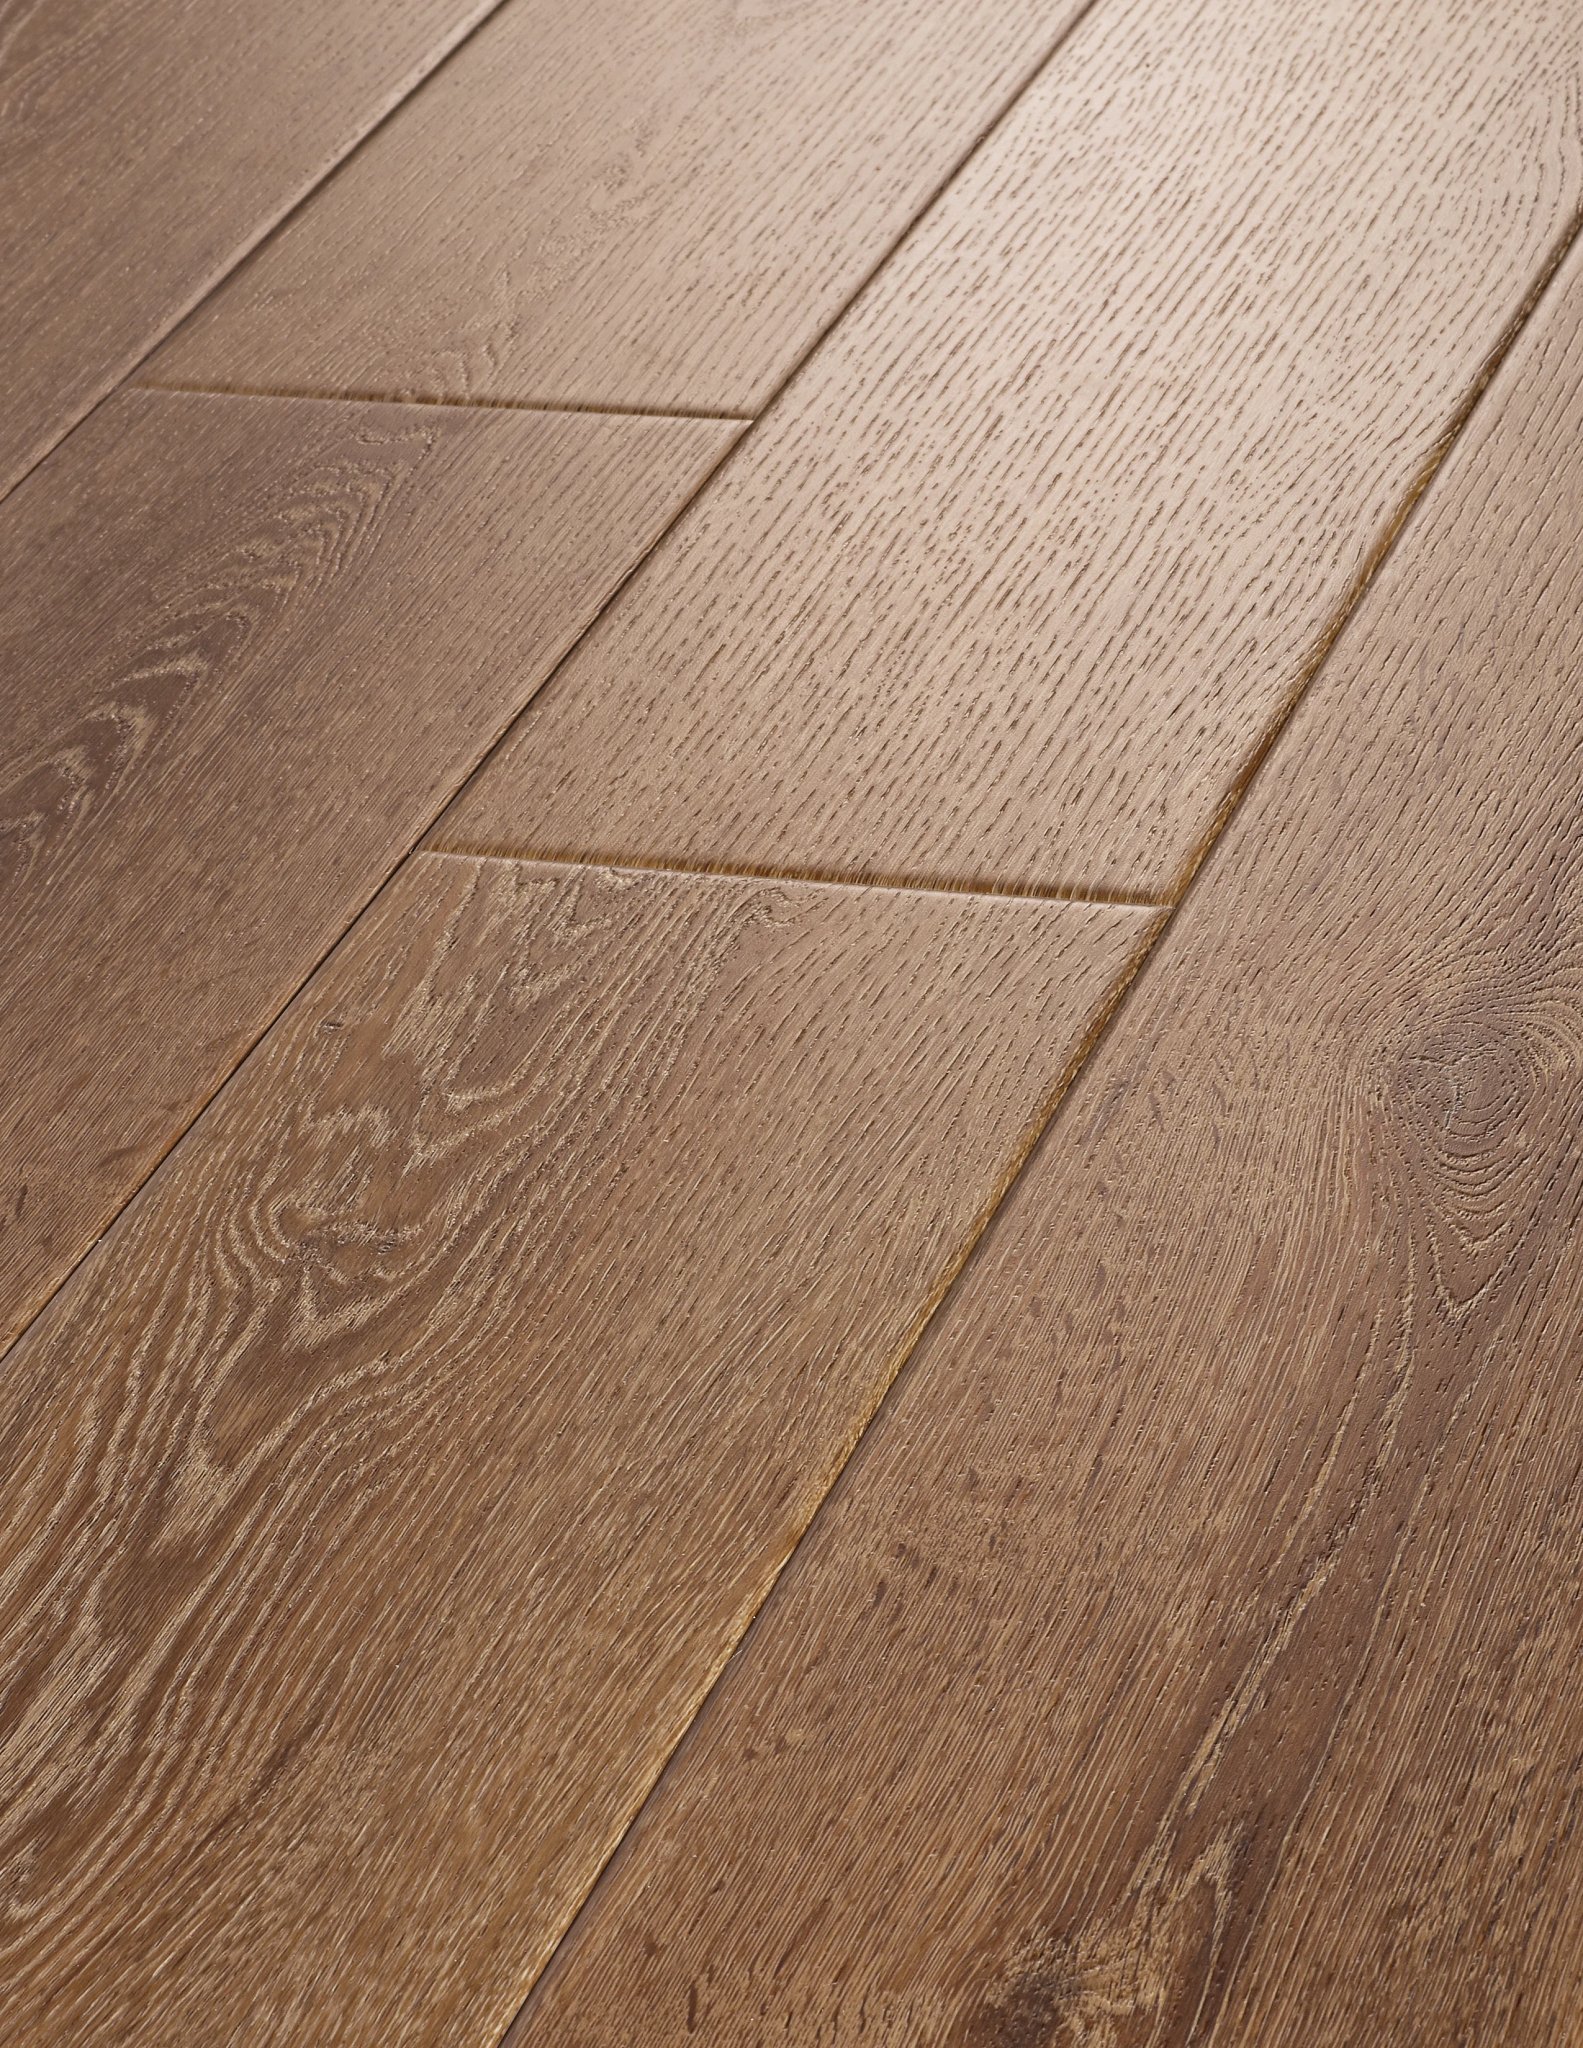 Coretec Premium Virtue Oak by Coretec - Glendale, AZ - Arrowhead Carpet Tile